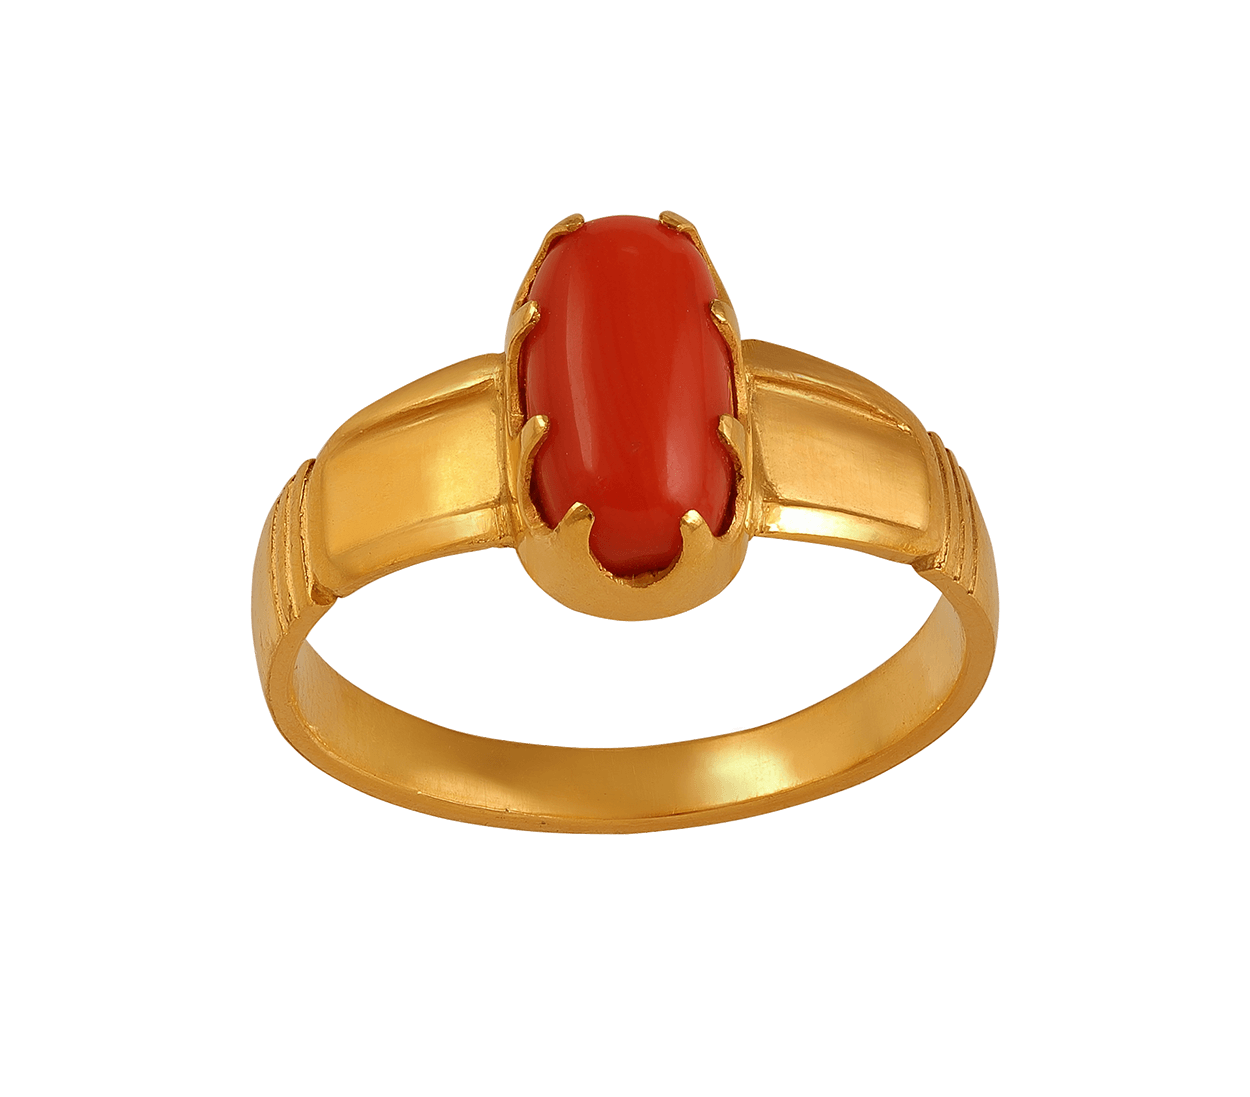 Procedure of Wearing Red Coral Gemstone Ring by Coral Gemstone - Issuu